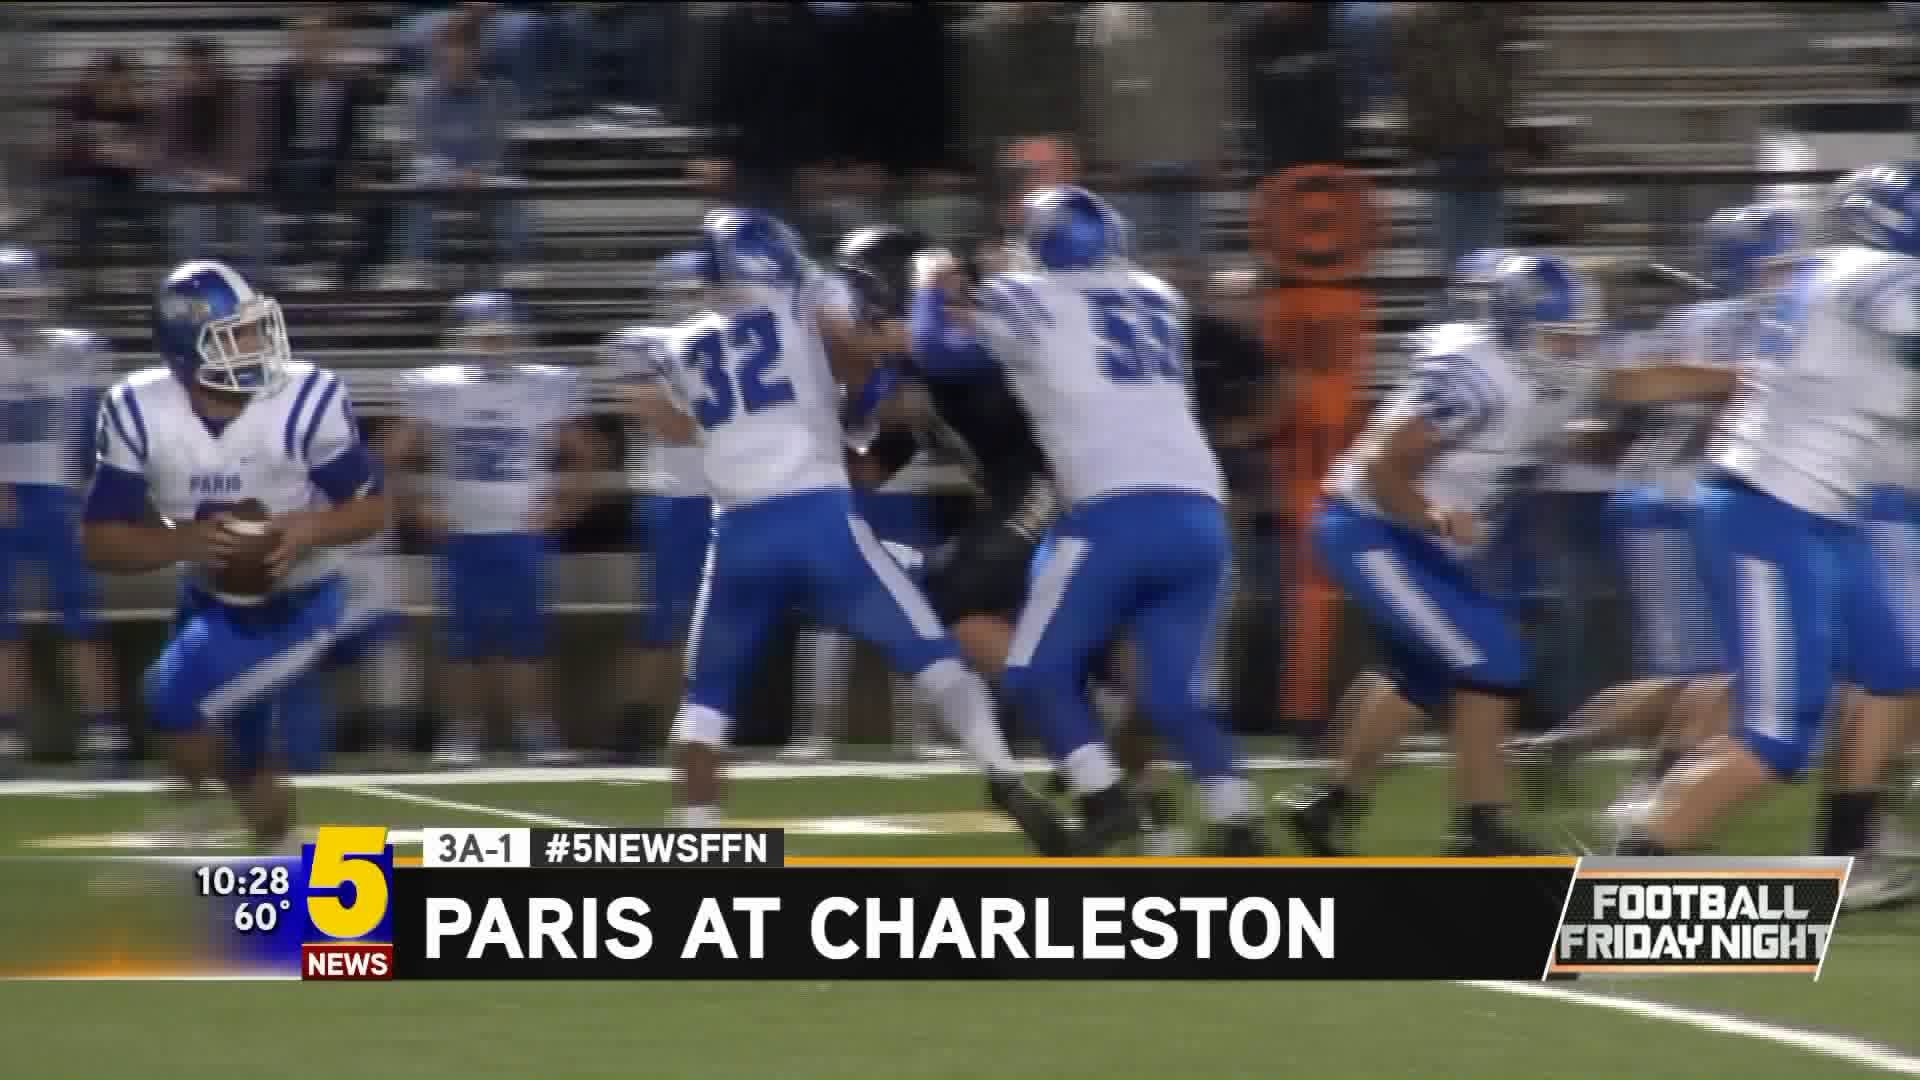 Paris at Charleston